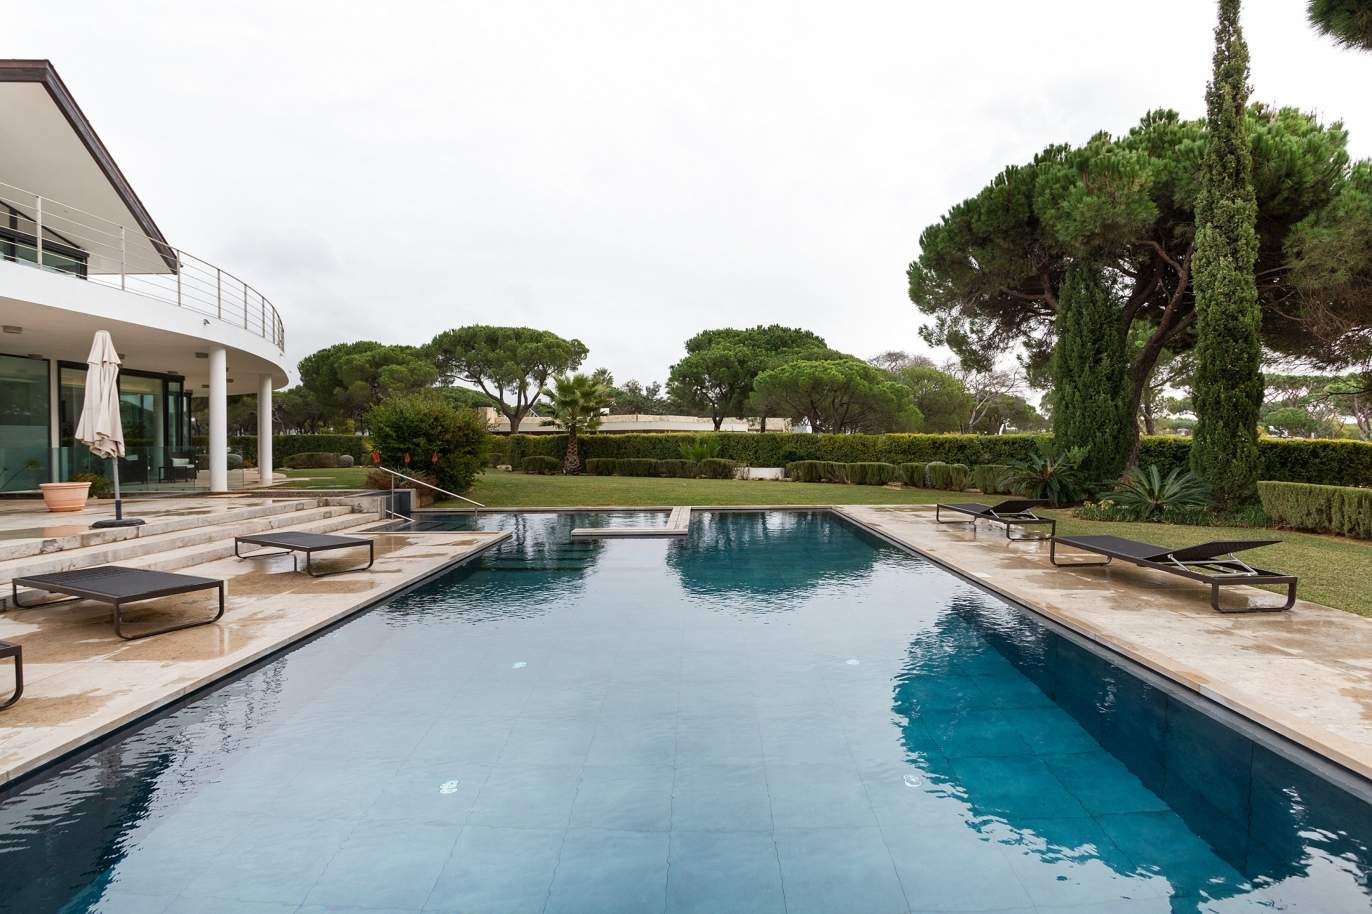 Moradia V7, com piscina, em Vilamoura, para venda - Algarve_188776